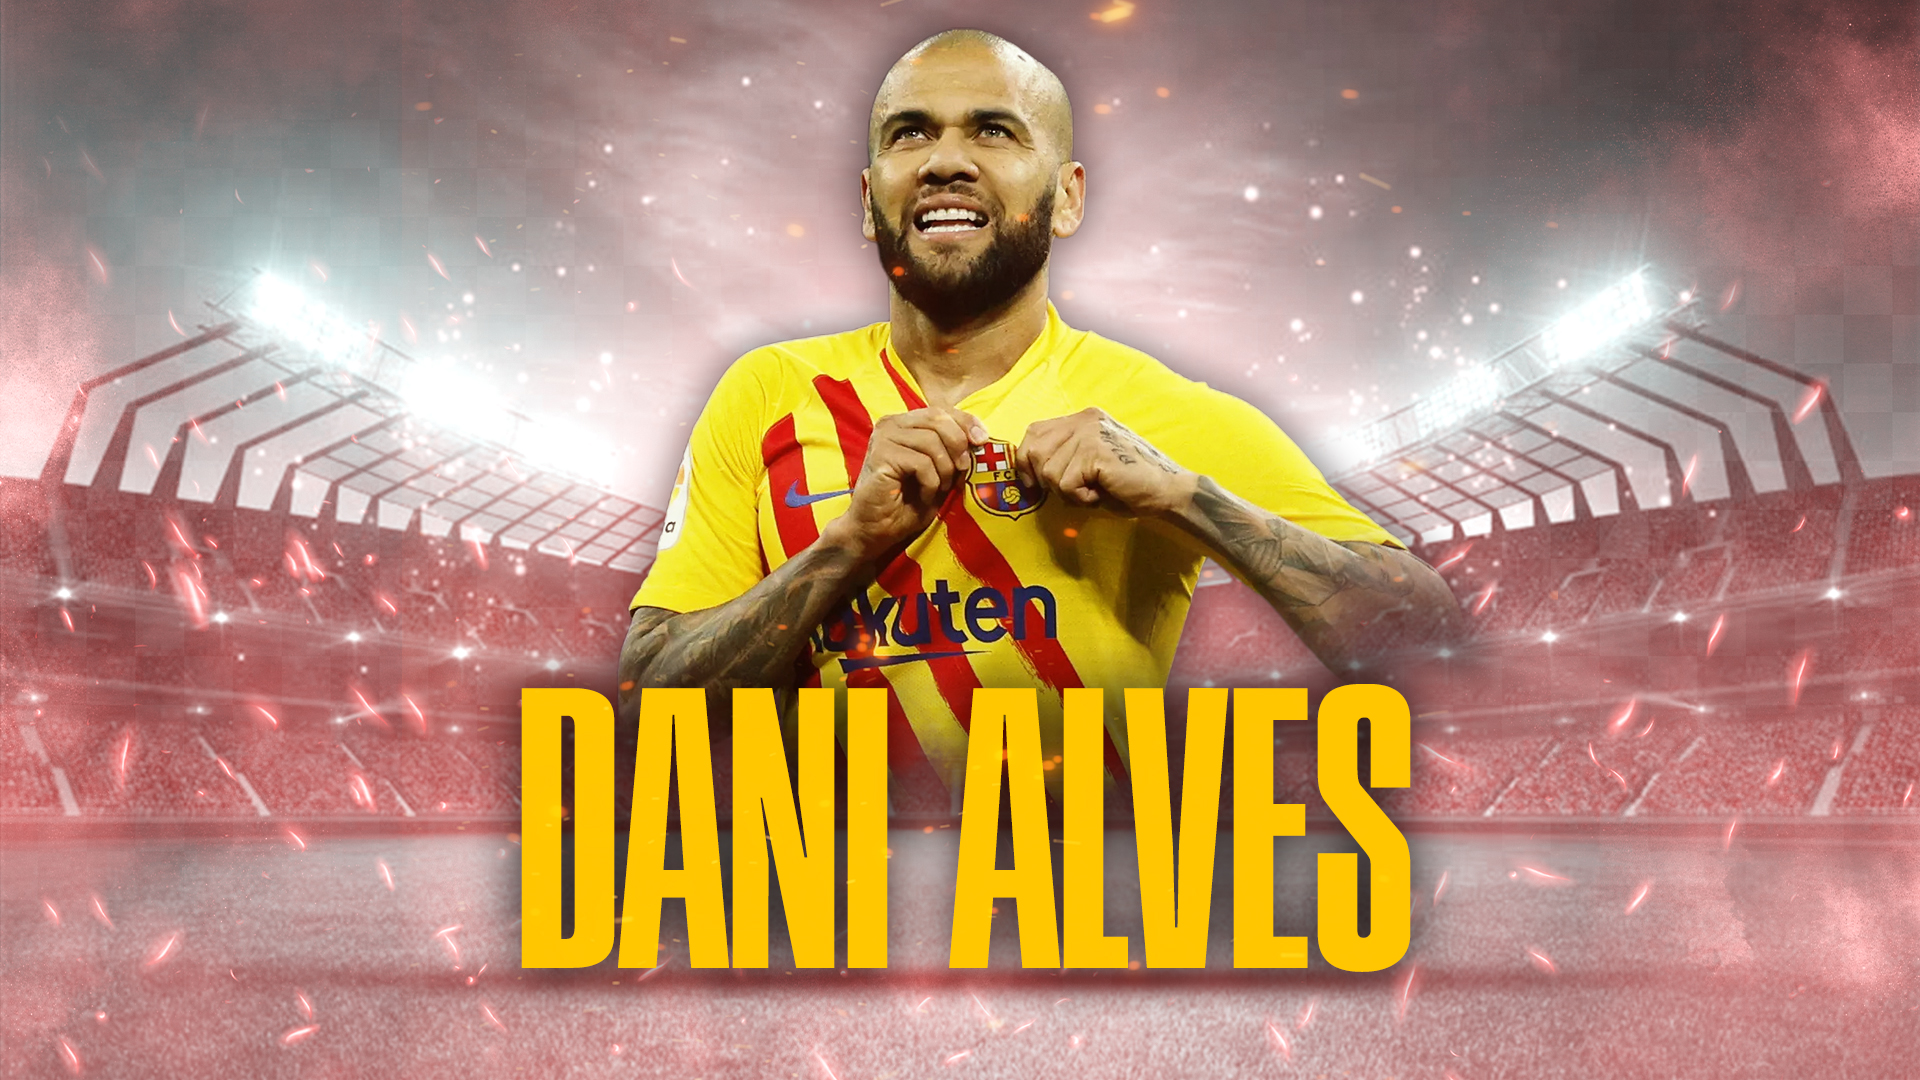 Yeni Alves, eski Barcelona